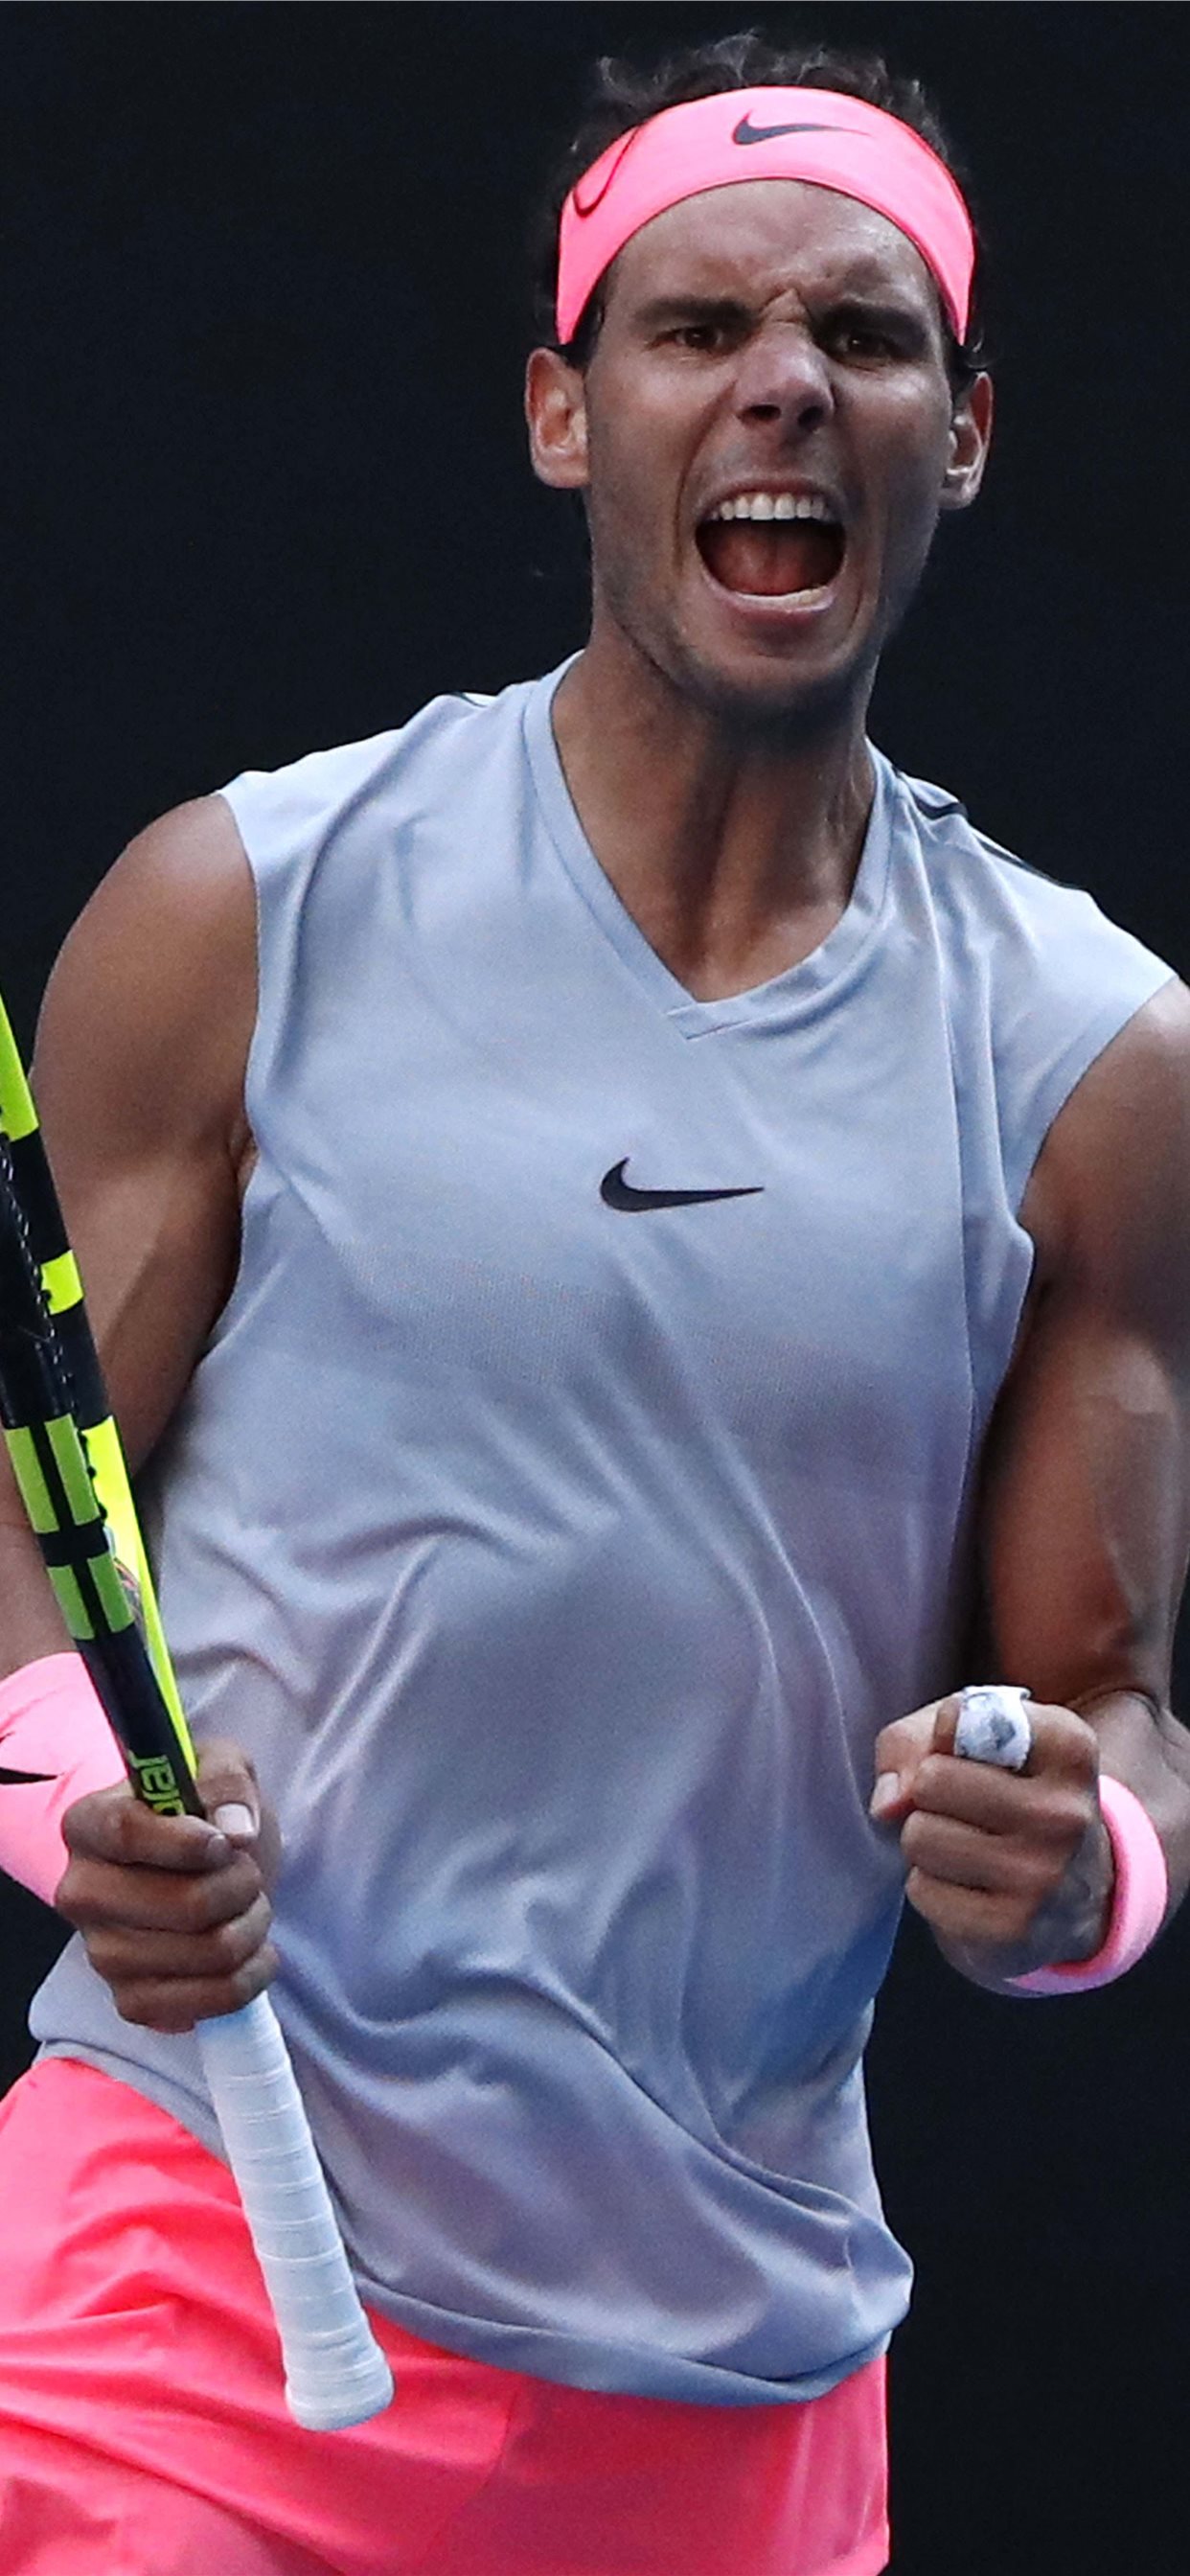 PHOTOS VIDEO 2018 Australian Open R2 Rafael Nadal ... X Wallpapers Free Download